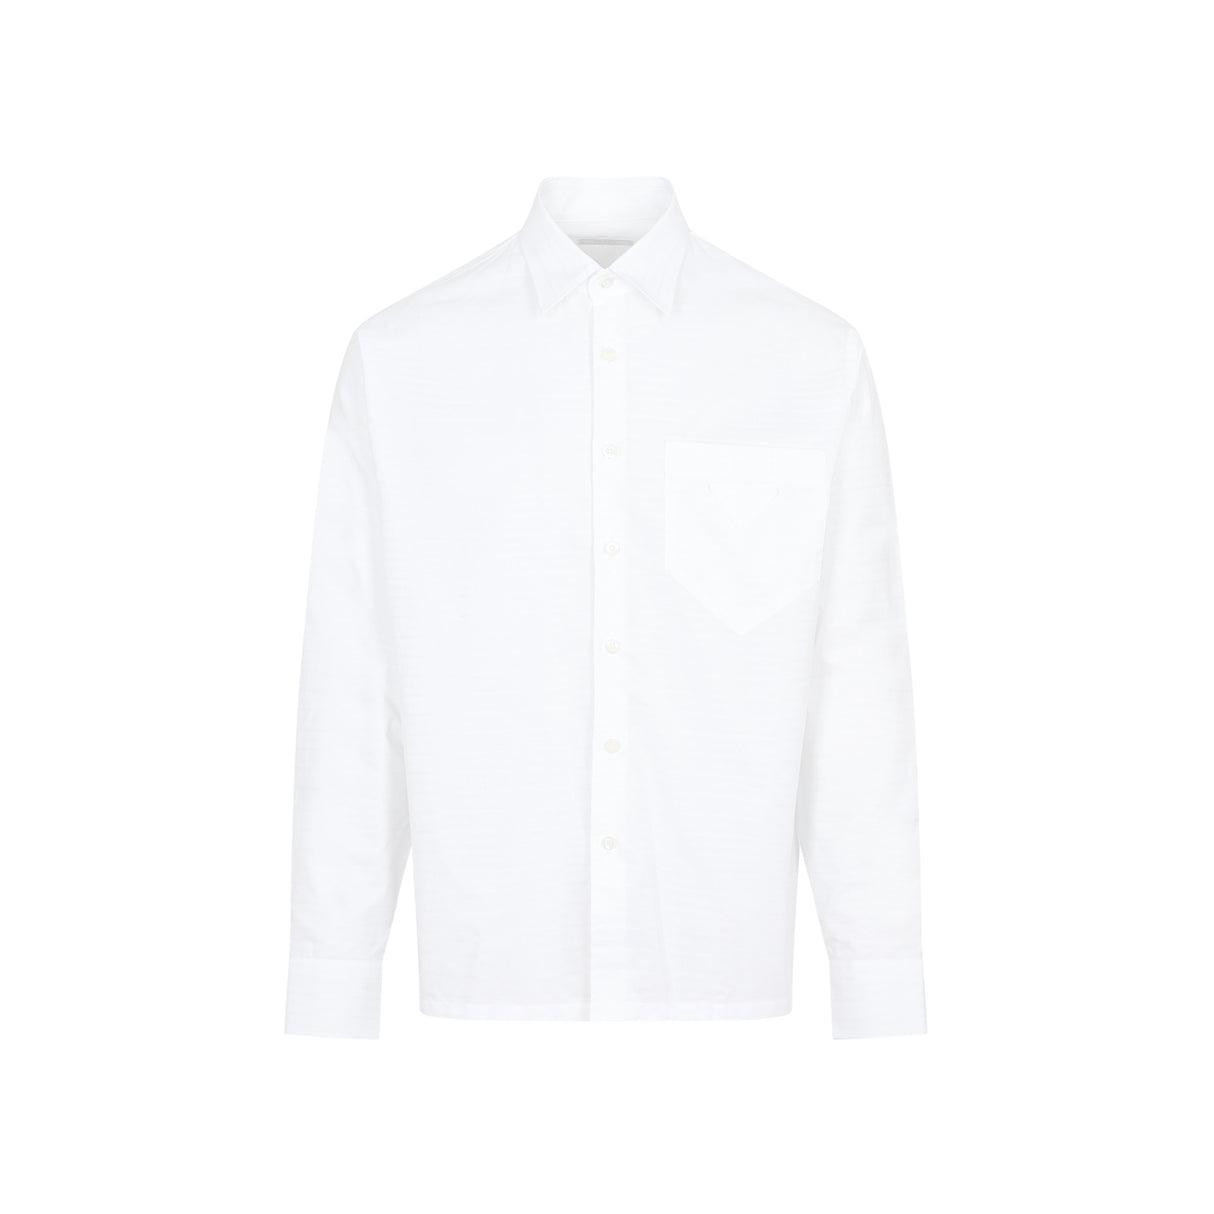 PRADA The Classic White Poplin Shirt for the Modern Gentlemen - FW23 Collection